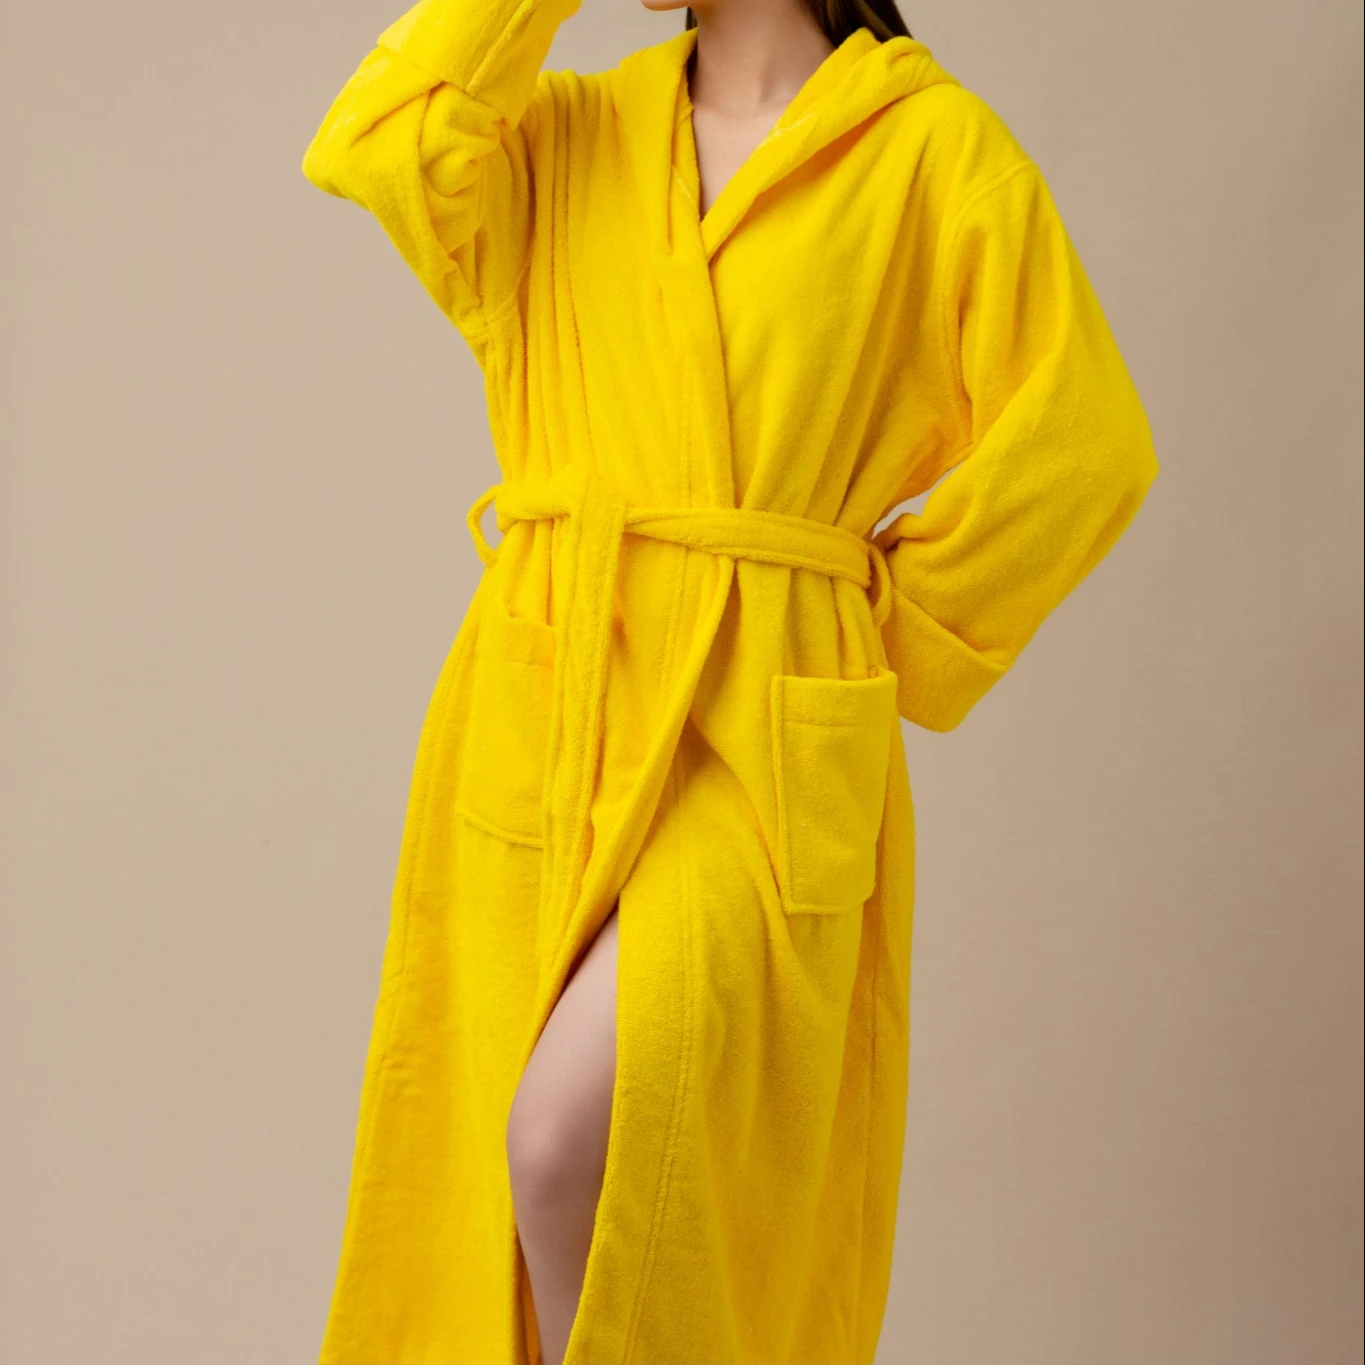 Terry Unisex 5 Star Luxury Hotel Spa Bathrobes For Men And Women Fabric 100 Cotton Bath Robe 